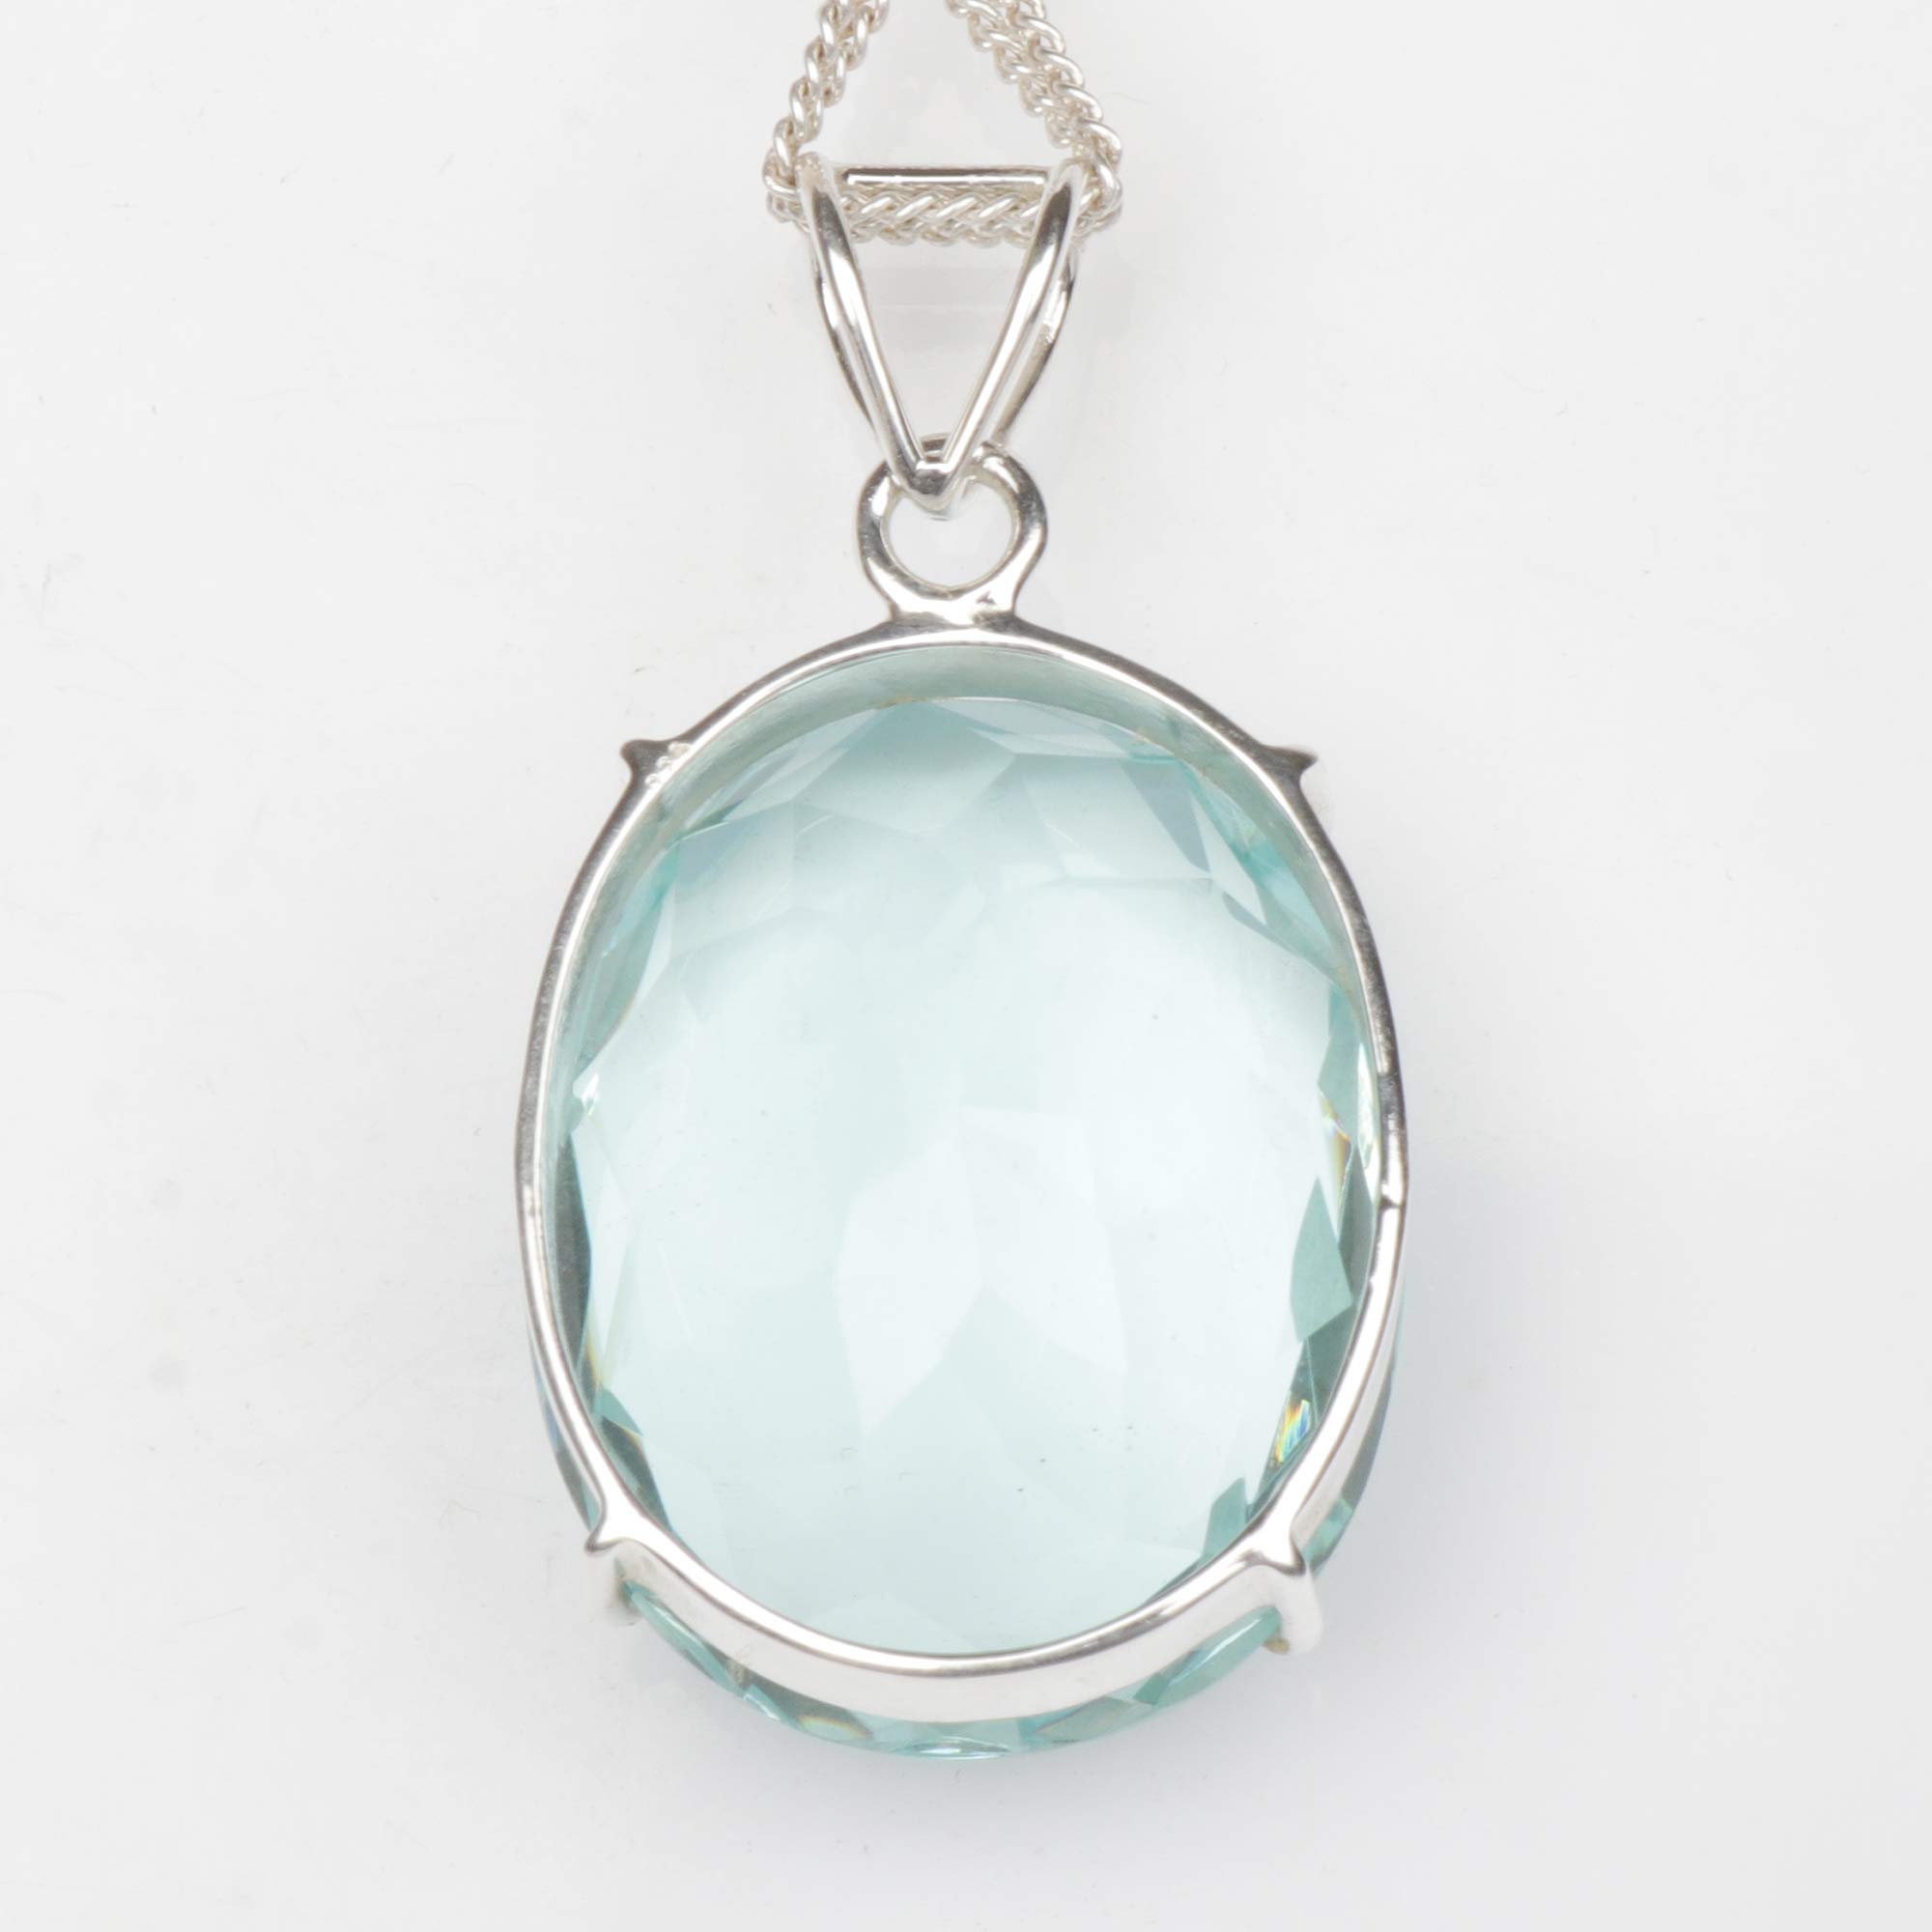 GEMHUB 18.00 Gram Sky Blue Color Aquamarine Gemstone Pendant Without Chain, Fine Oval Cut Sterling Silver 1 Piece Pendant Without Chain